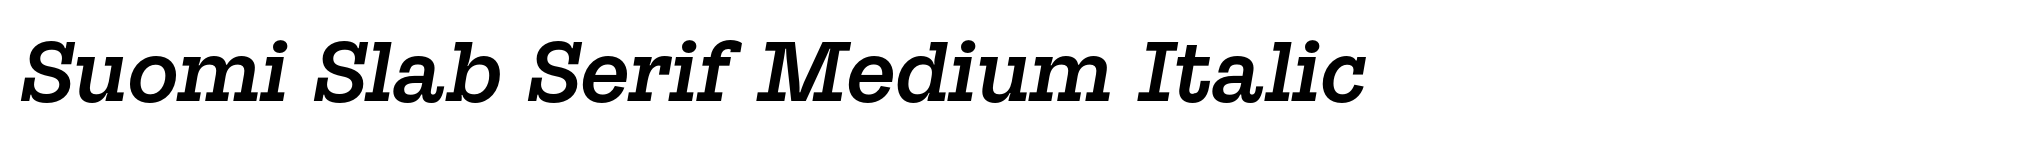 Suomi Slab Serif Medium Italic image